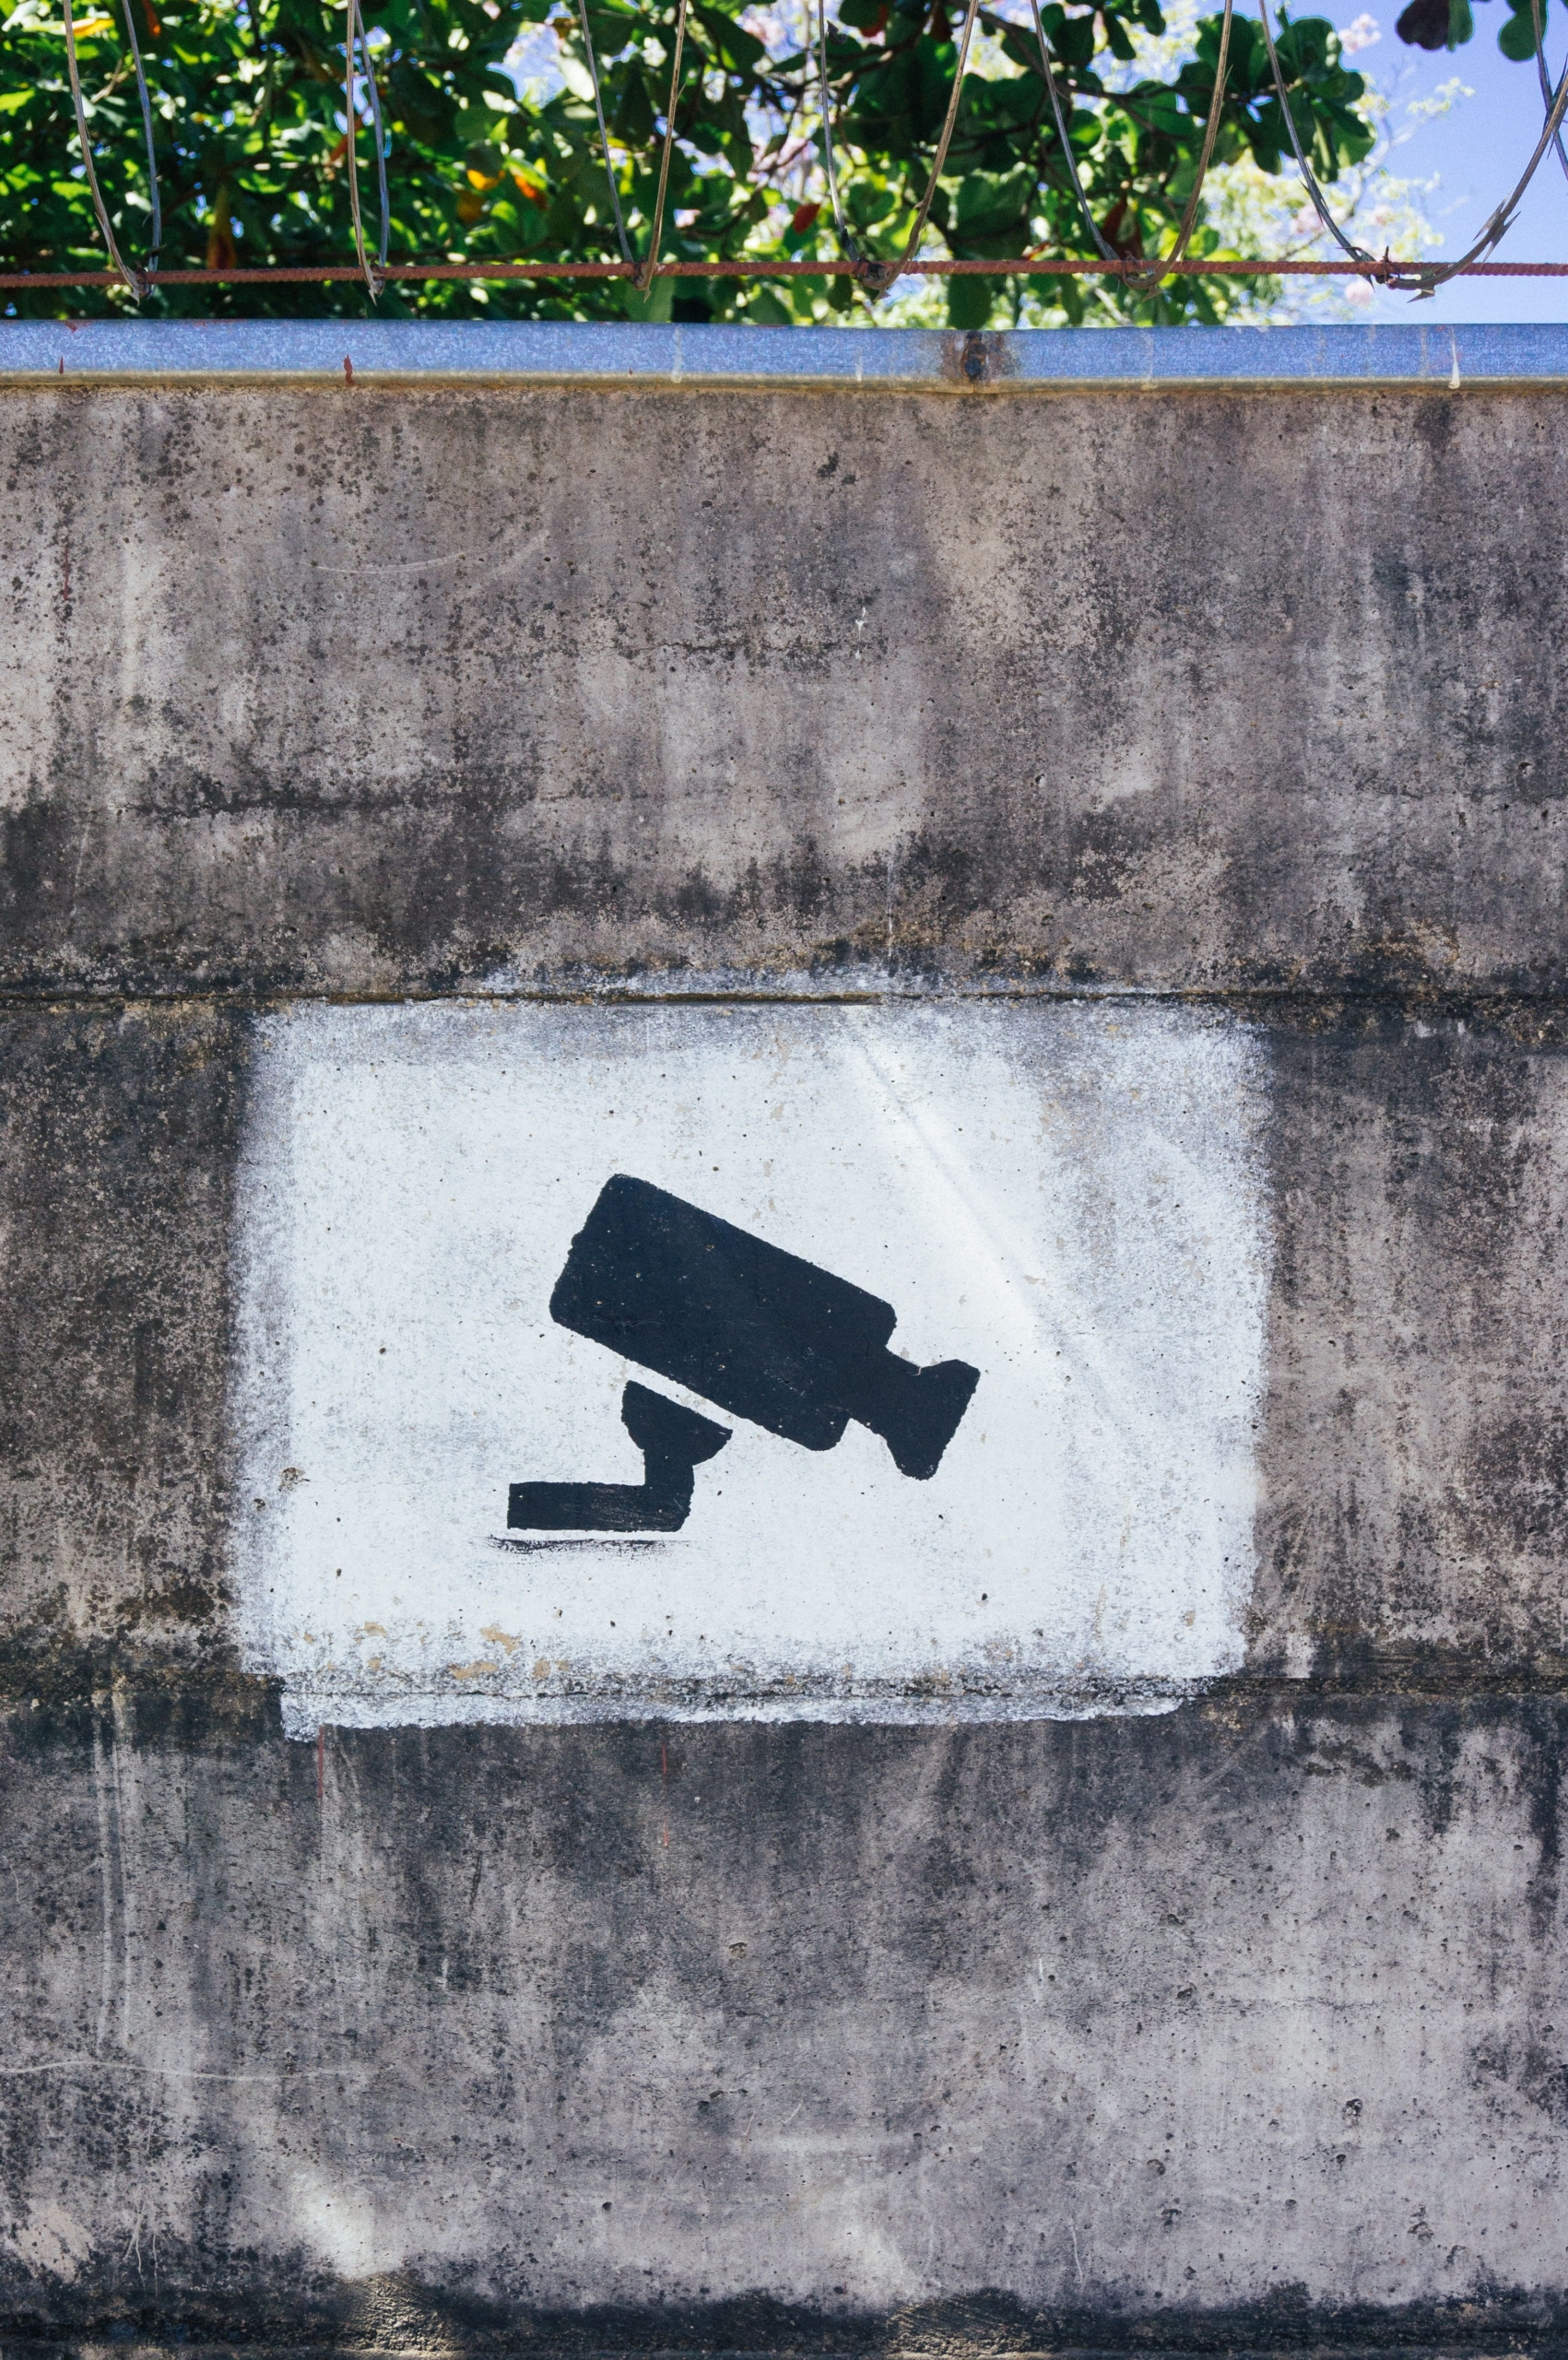 Video Surveillance Management Solutions for Businesses